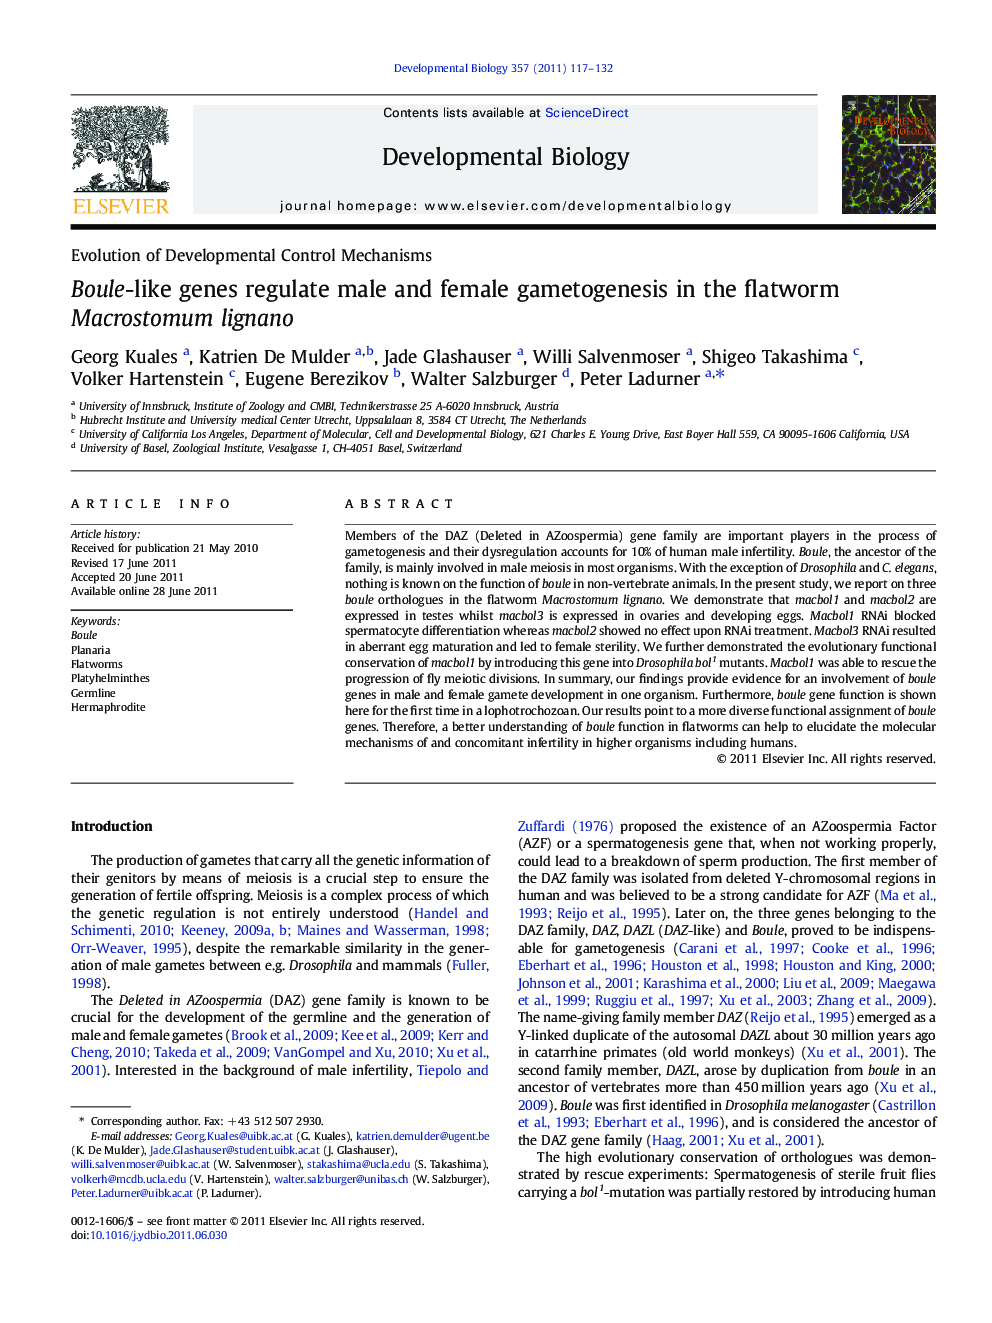 Boule-like genes regulate male and female gametogenesis in the flatworm Macrostomum lignano